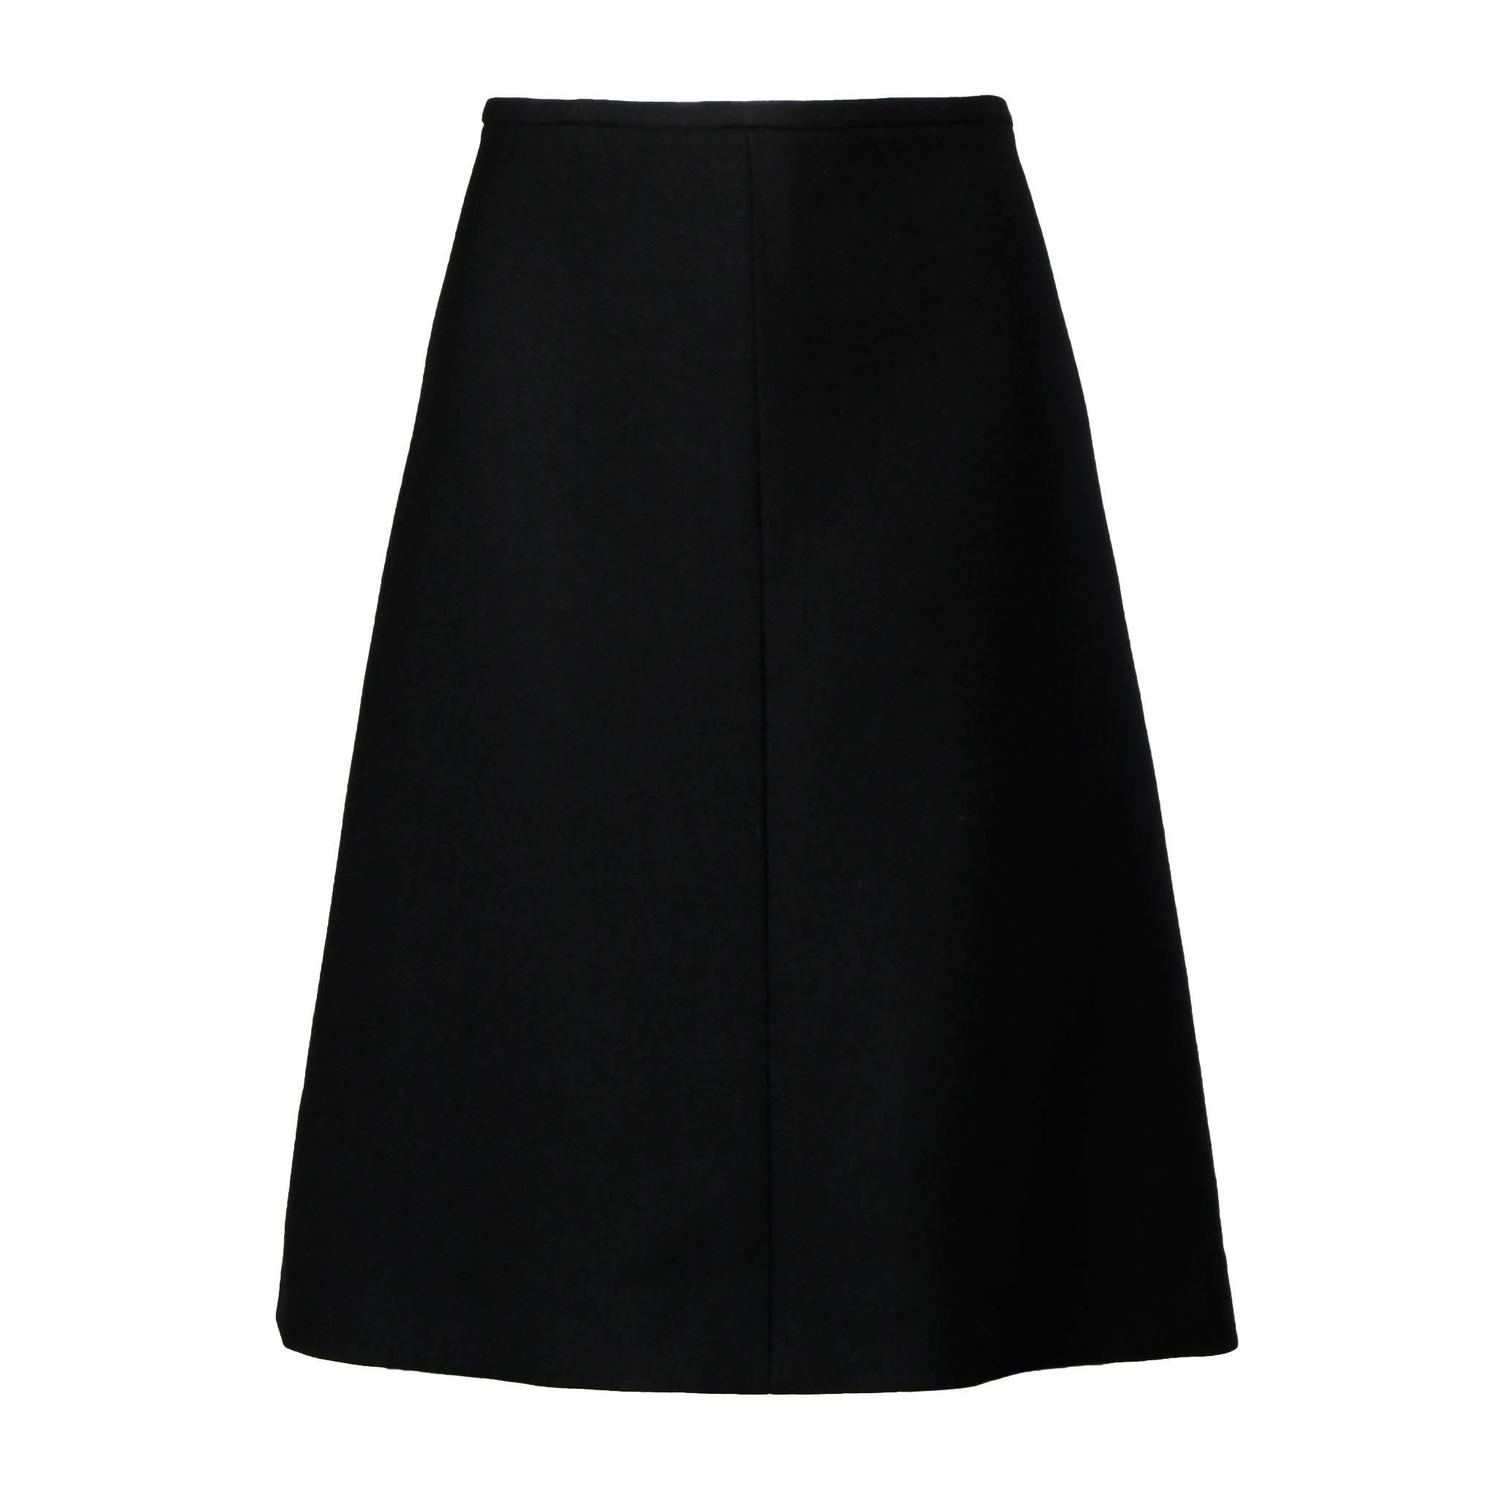 Louis Feraud Vintage Black Wool A-Line Skirt For Sale at 1stdibs